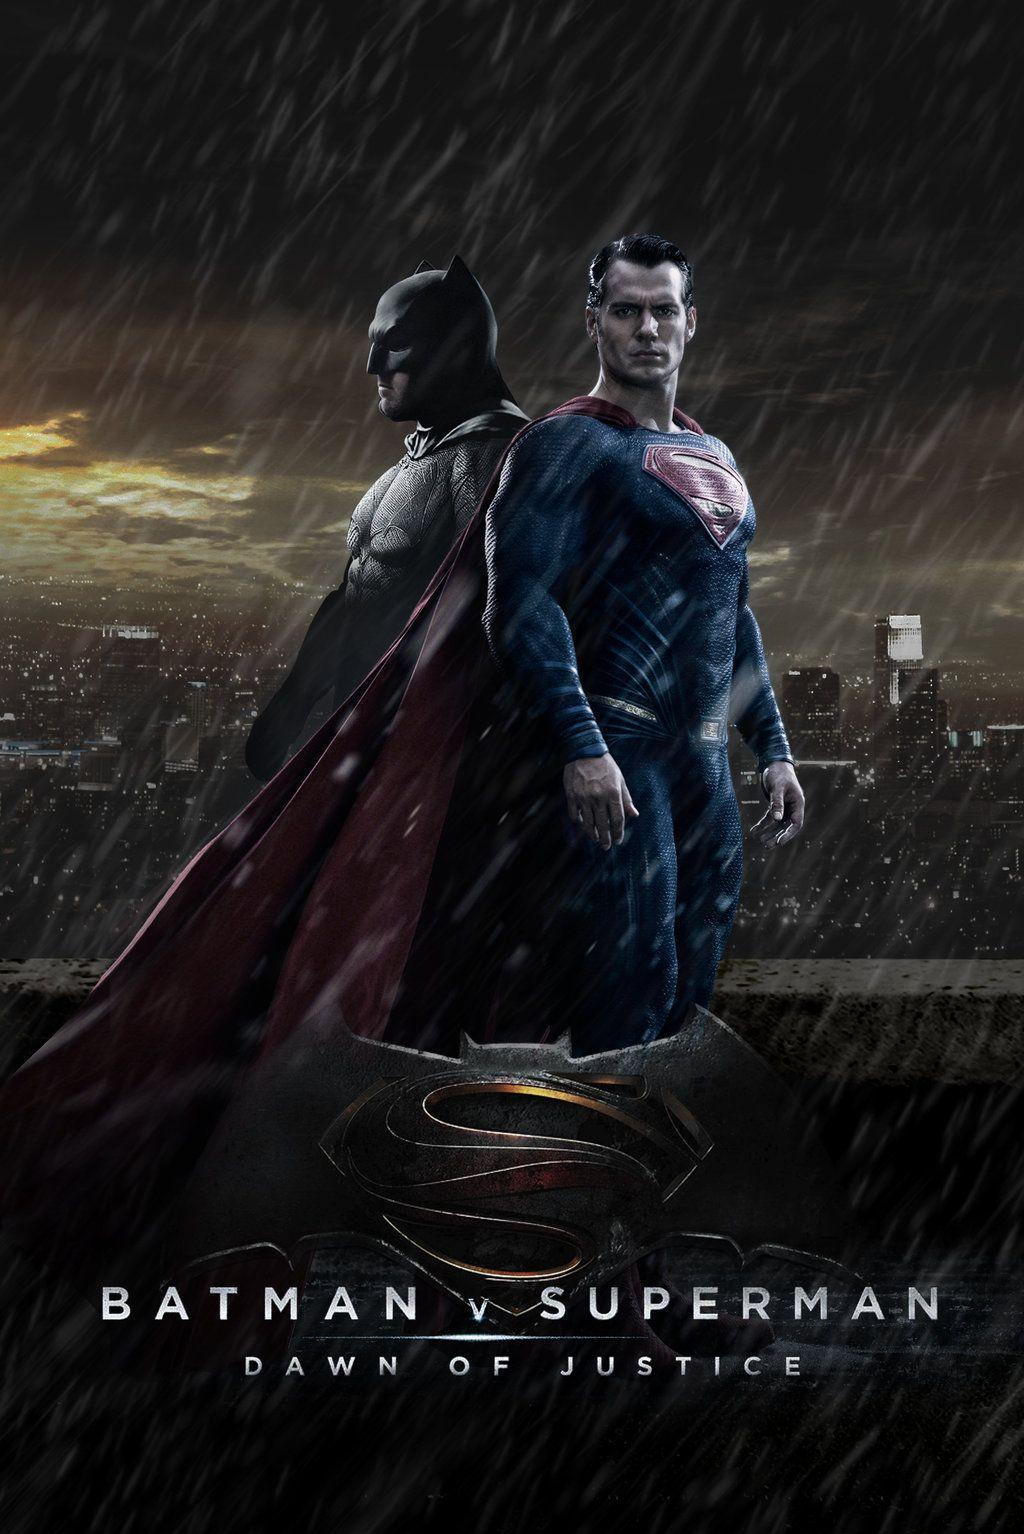 Batman vs Superman HQ Wallpaper. Full HD Picture